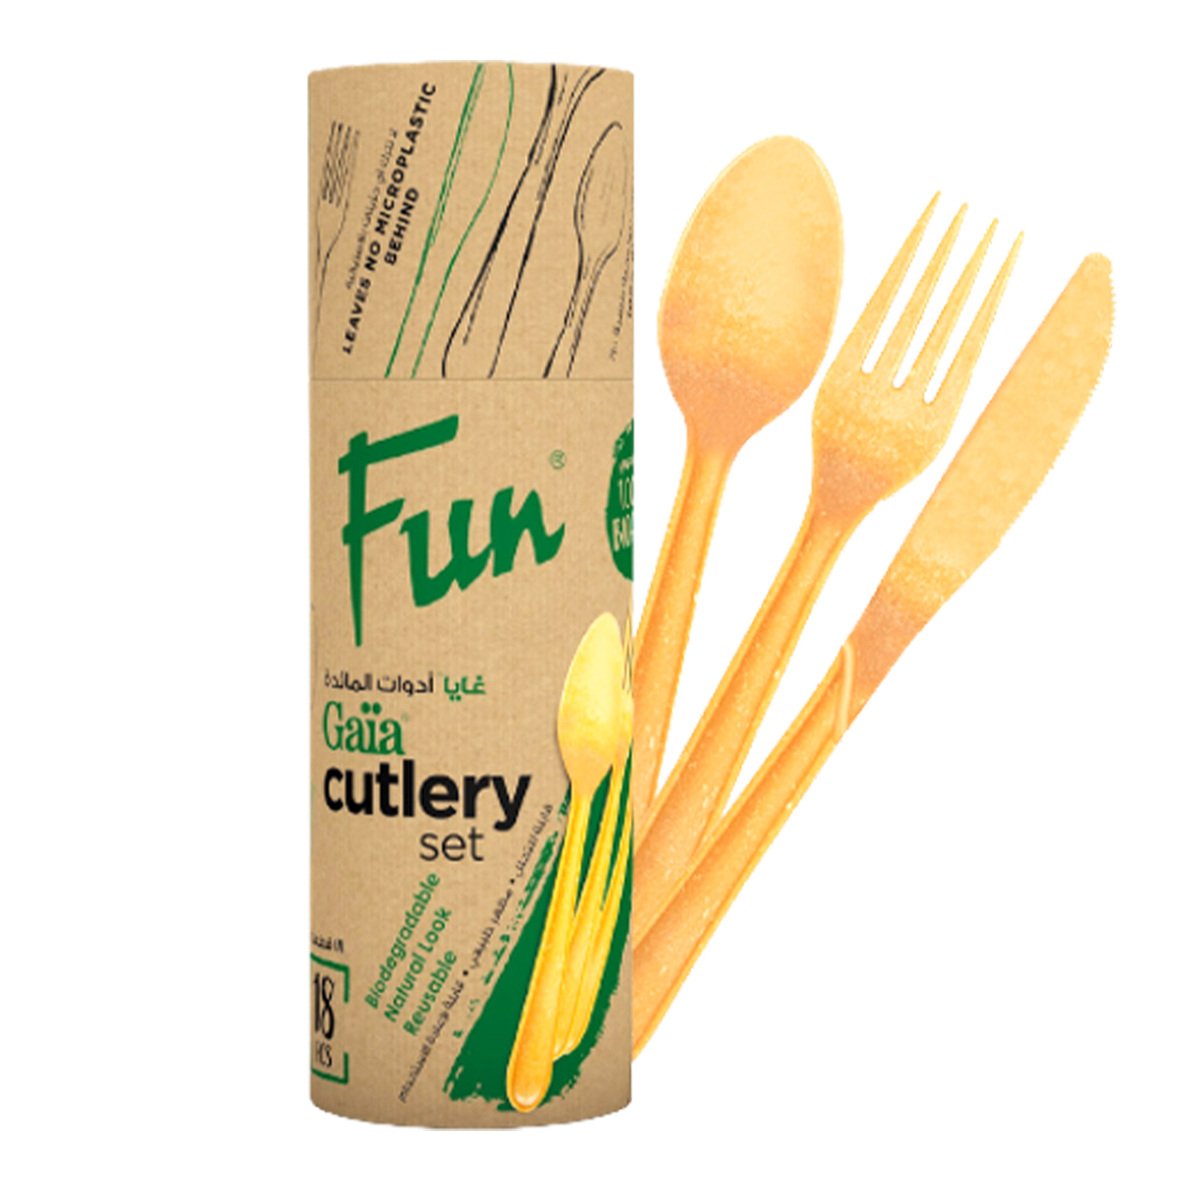 Fun Gaia Cutlery Set 18 pcs